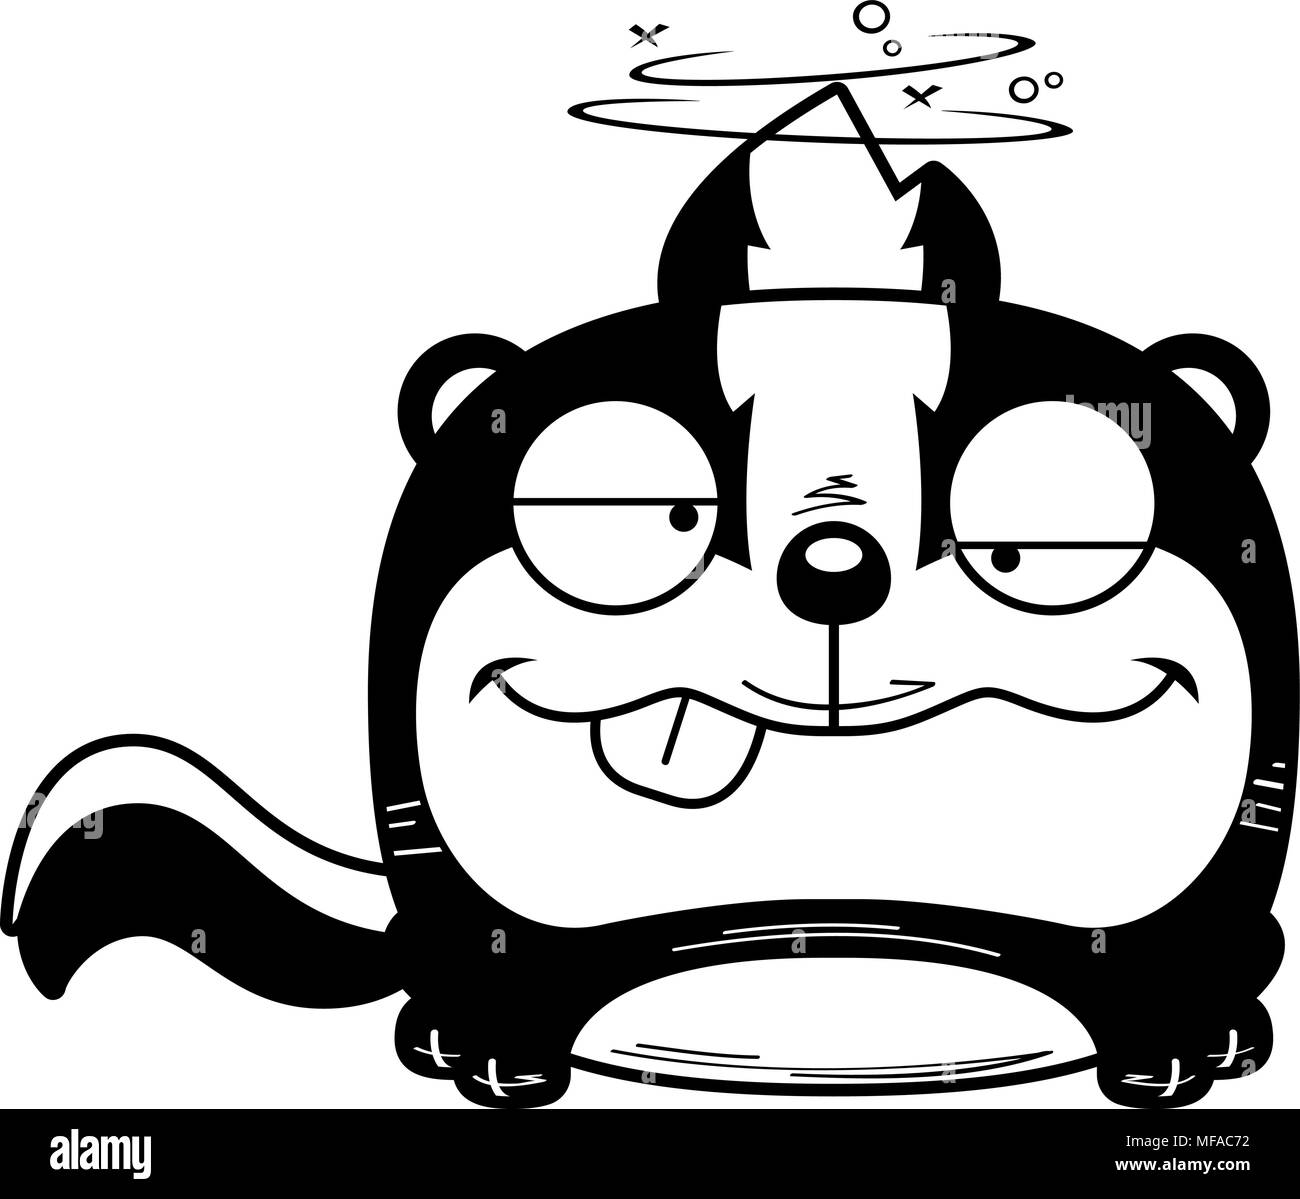 Eine Karikatur Illustration ein Stinktier mit goofy Ausdruck. Stock Vektor